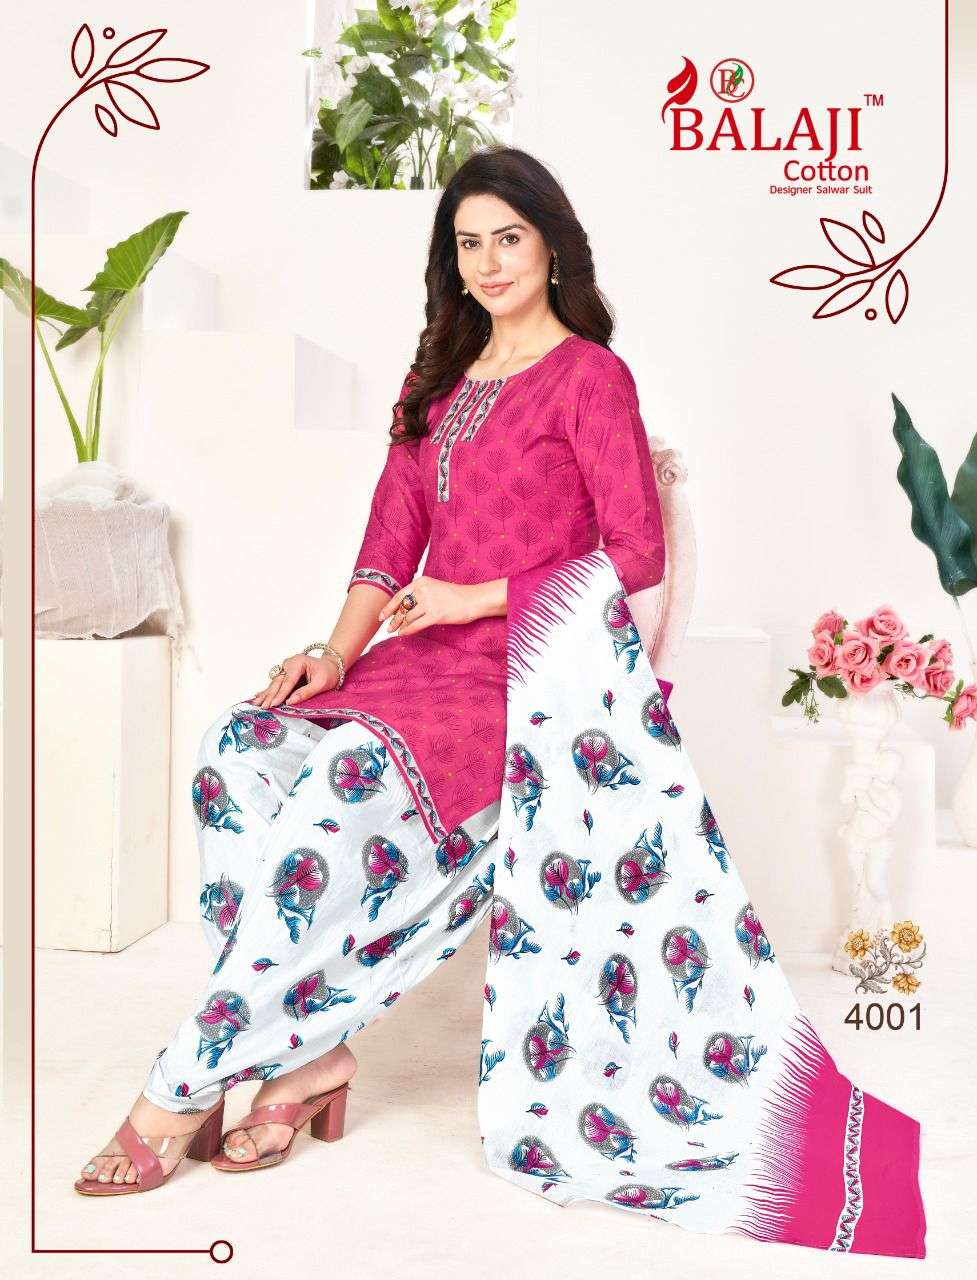 balaji cotton sui dhaaga vol 4 cotton dress material collection wholesale price surat